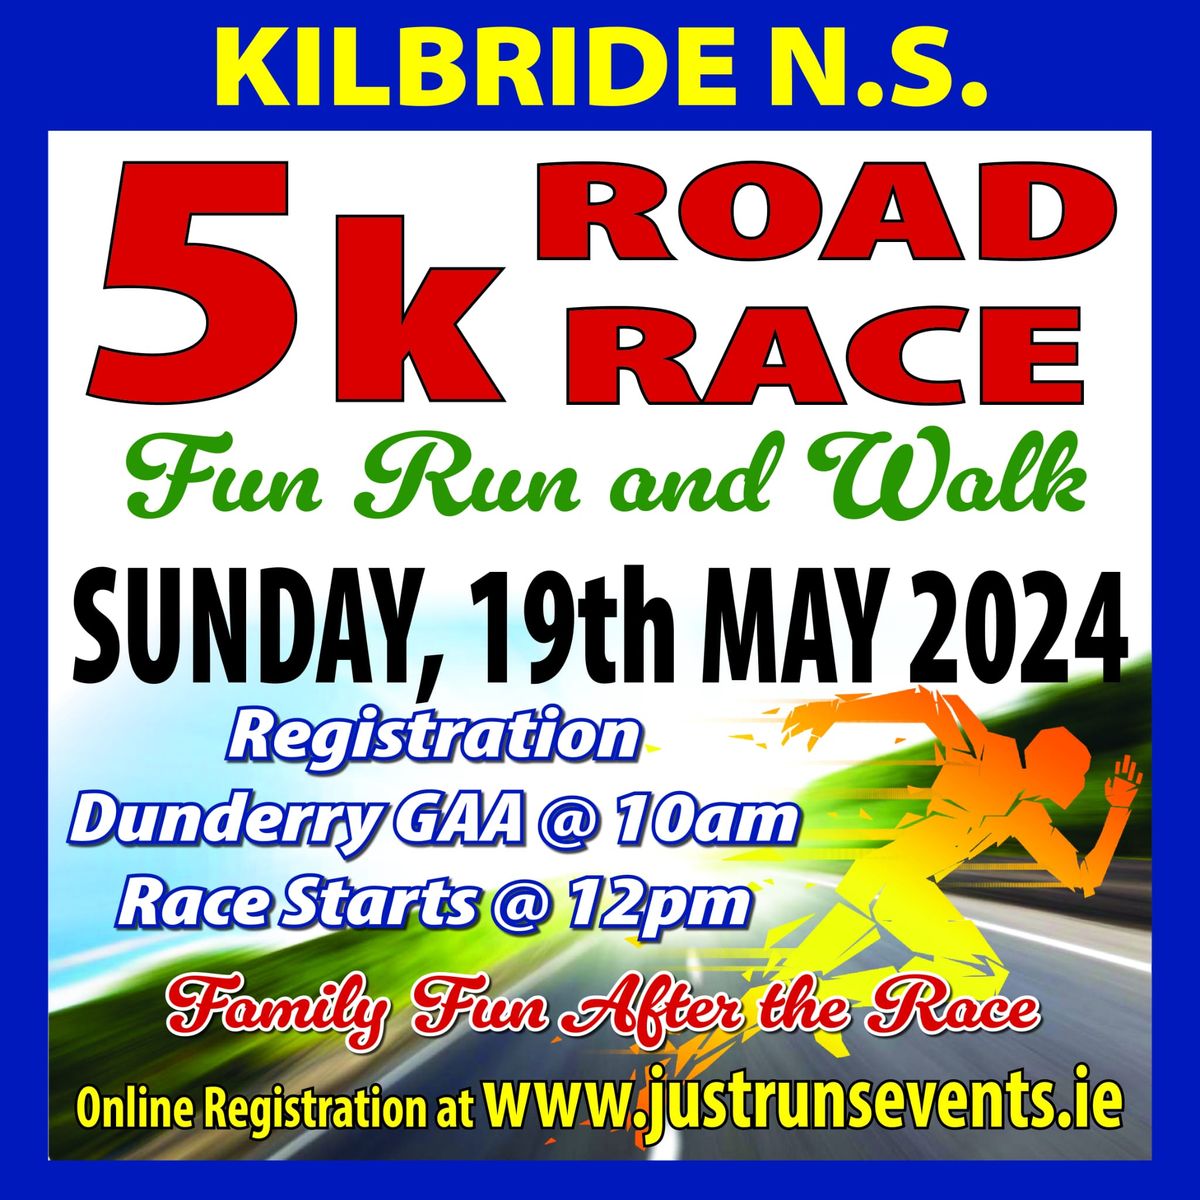 Kilbride NS 5km Race, Fun Run, Walk and Family Day